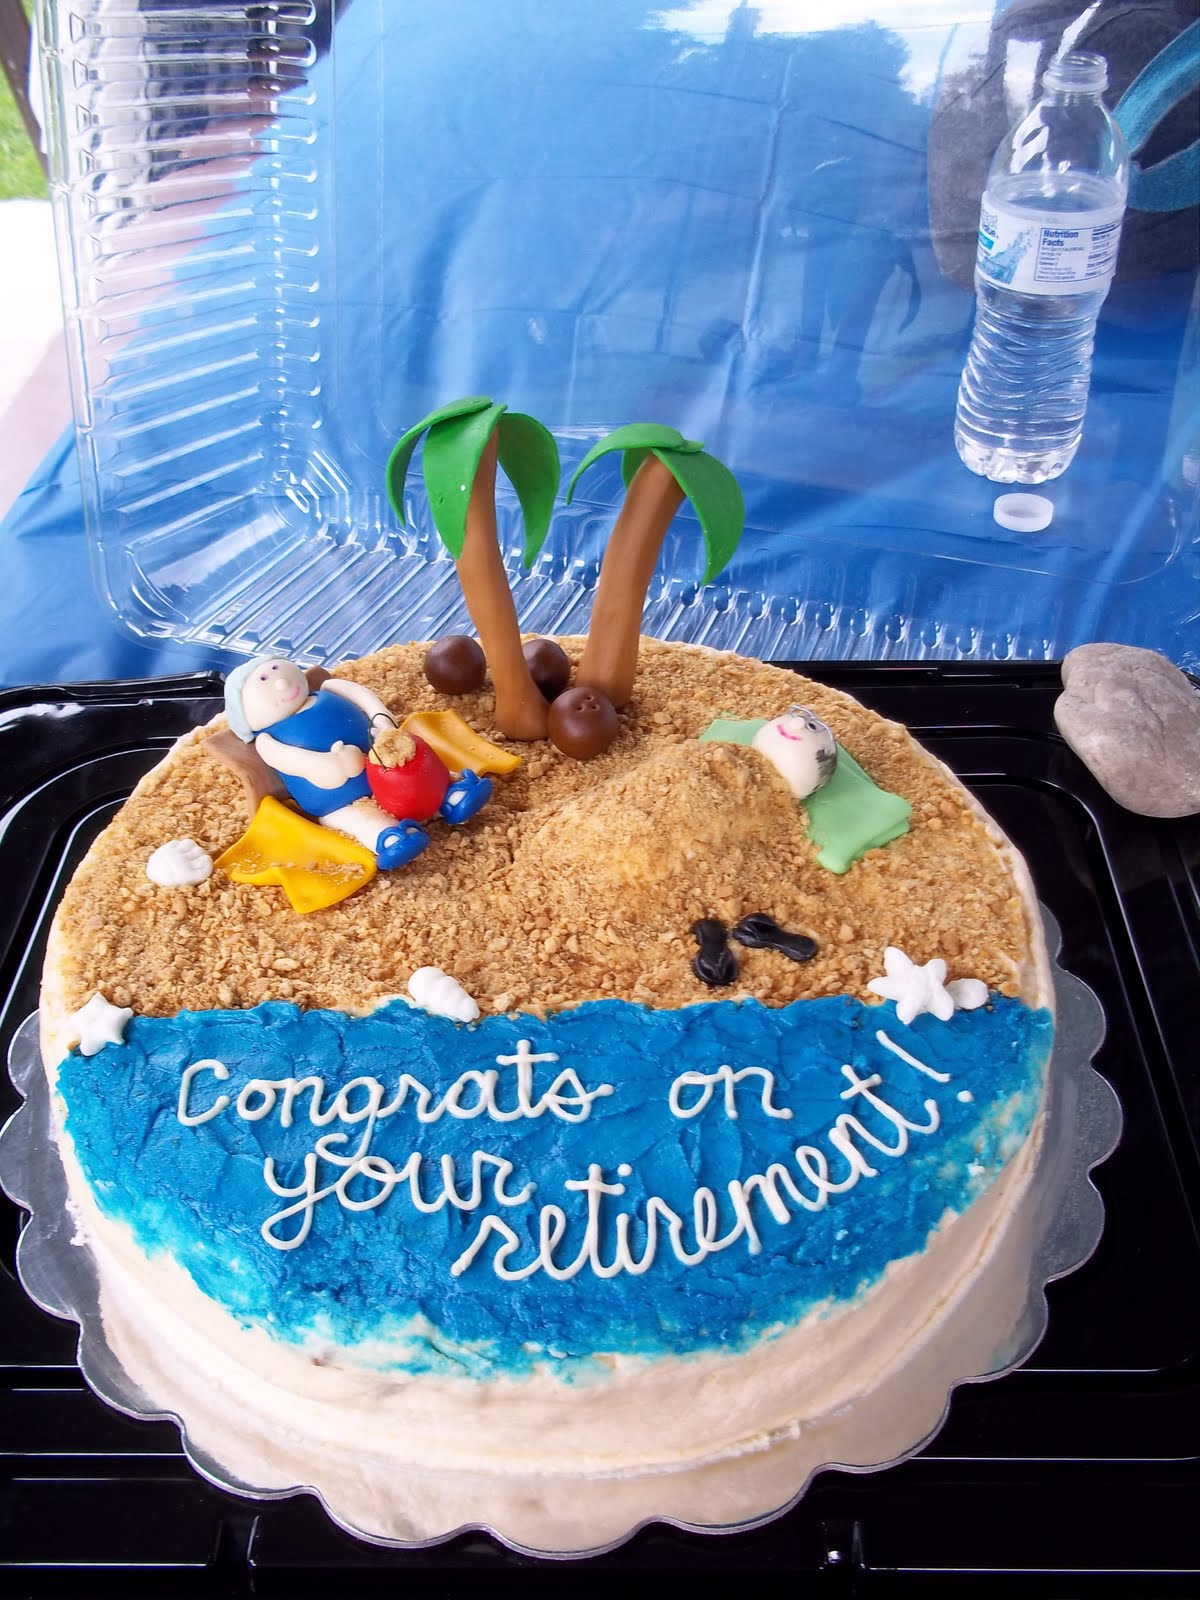 7 Photos of Retirement Celebration Cakes